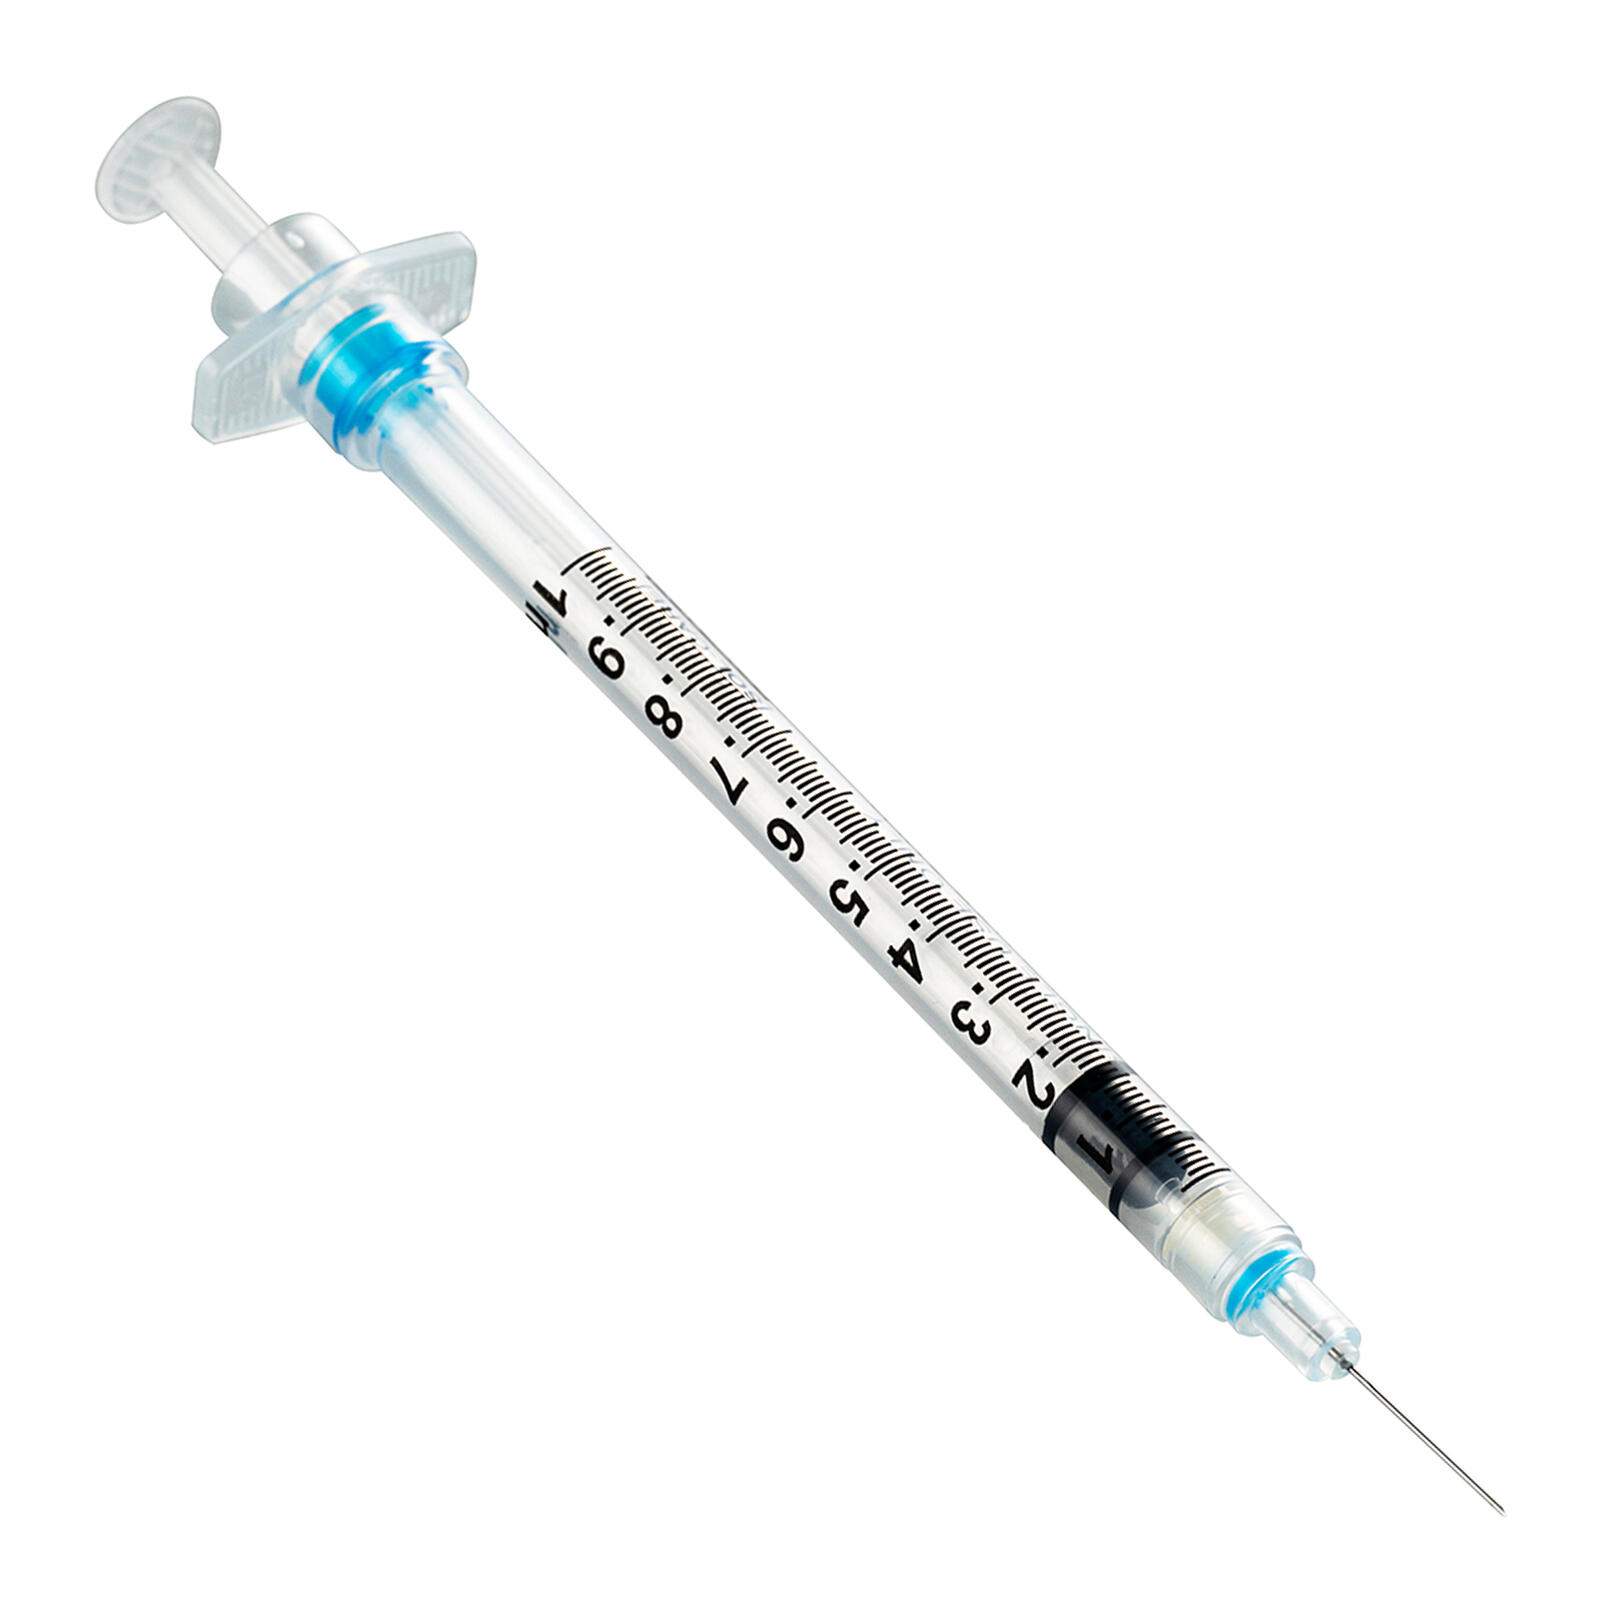 Safety syringe with fixed needle | Sol-Care™